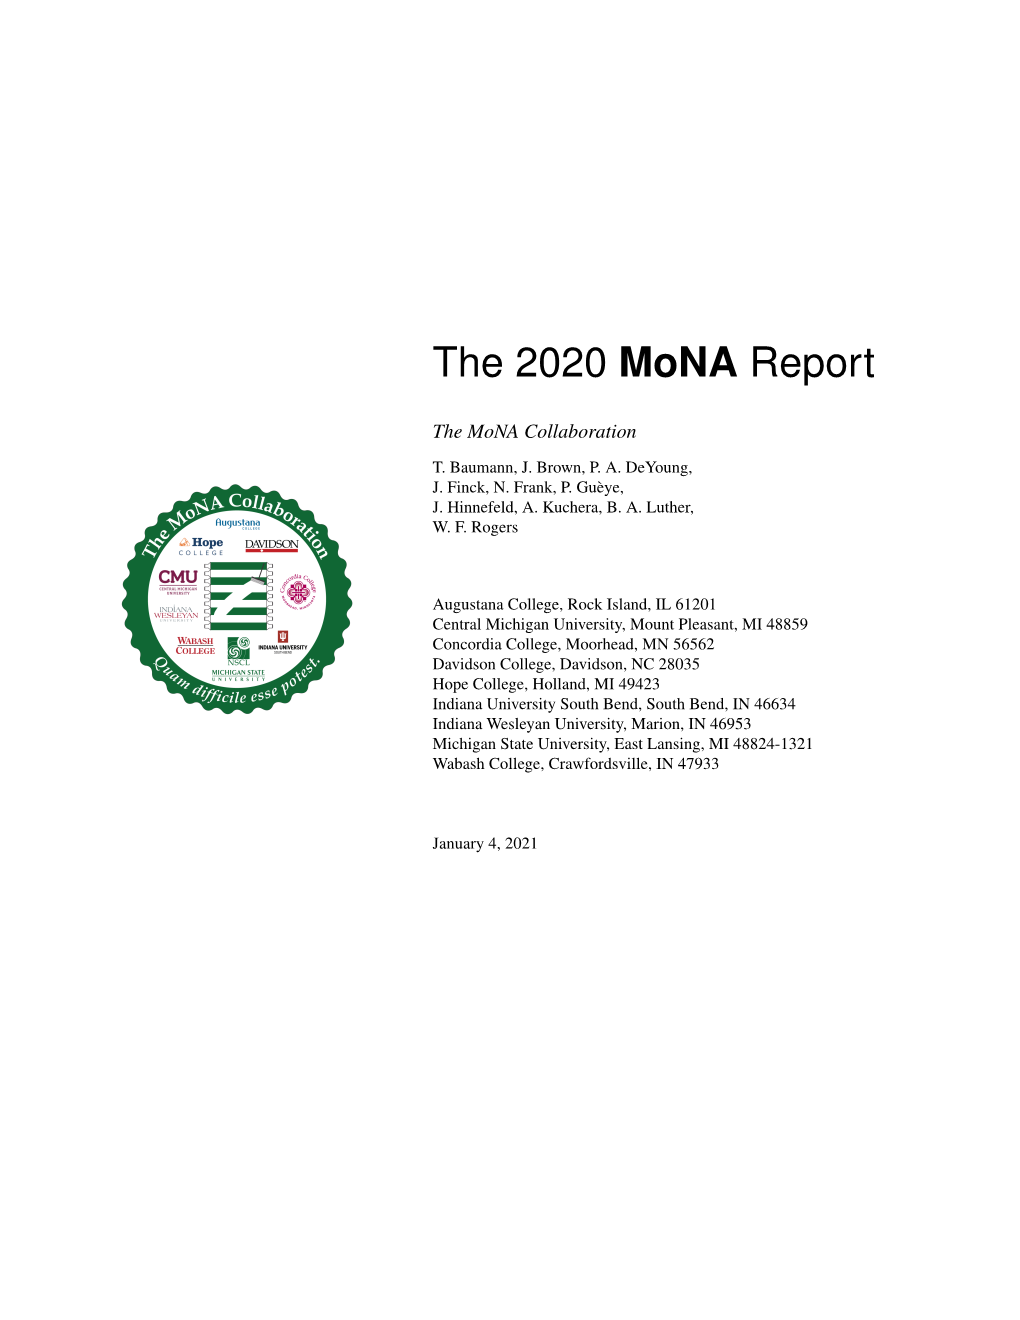 The 2020 Mona Report